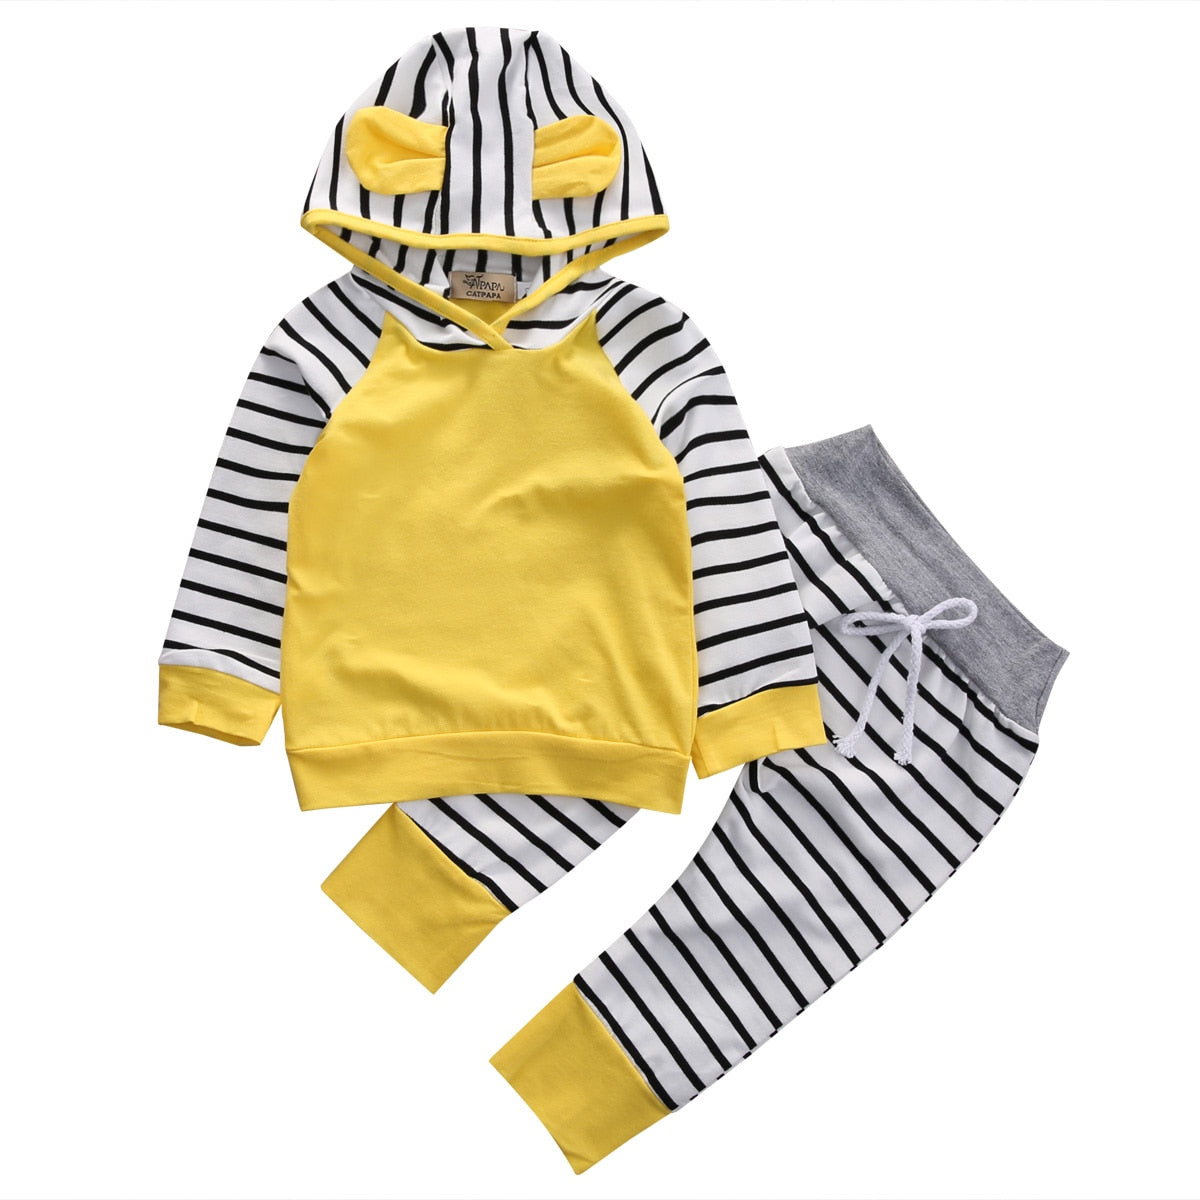 Cute Newborn Toddler Kids Baby Boys Girls Outfits Clothes T-shirt Tops+Pants 2PCS Set - ebowsos